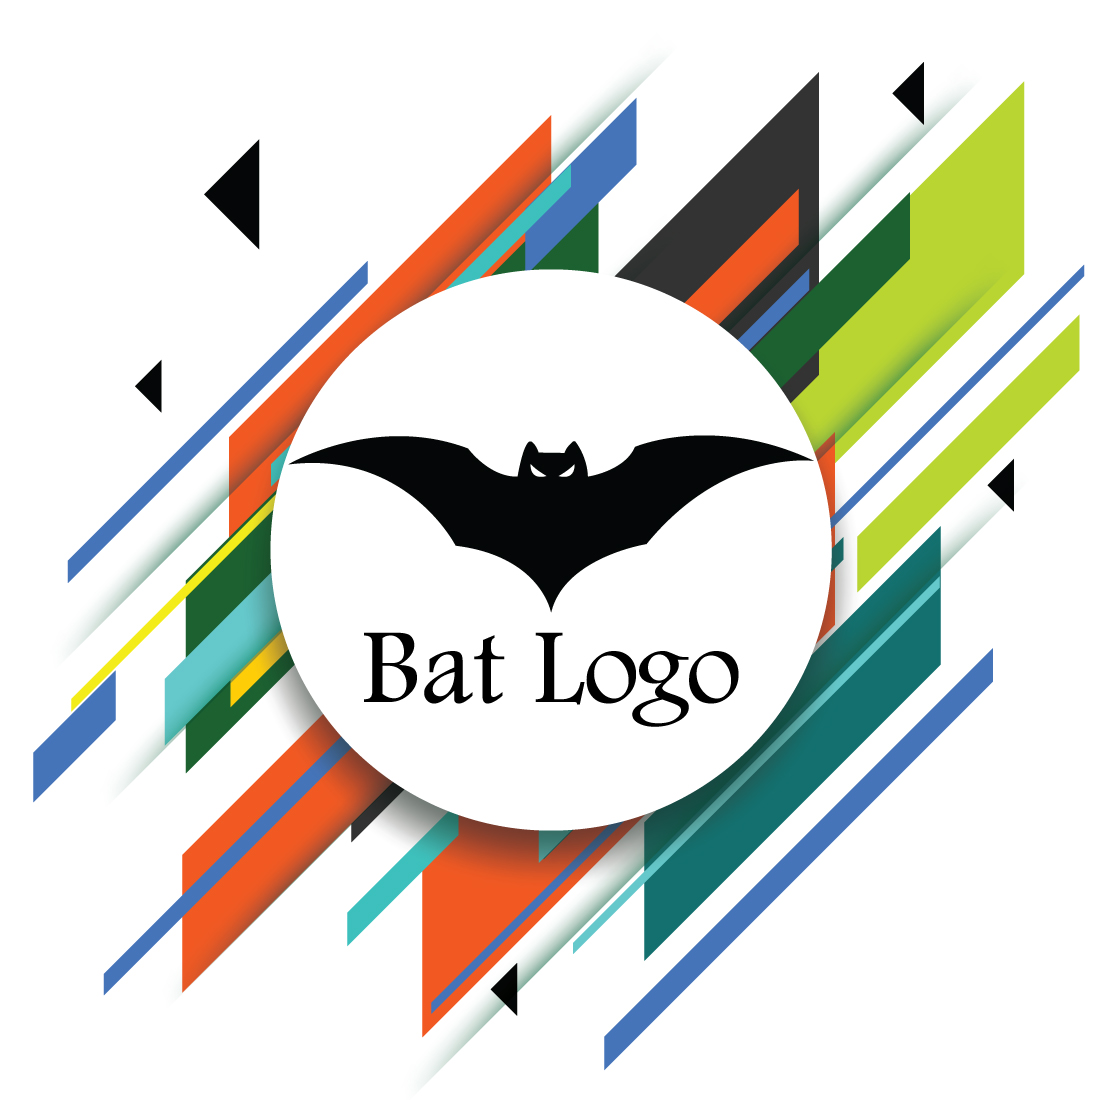 Bat Logo Vector Design cover image.